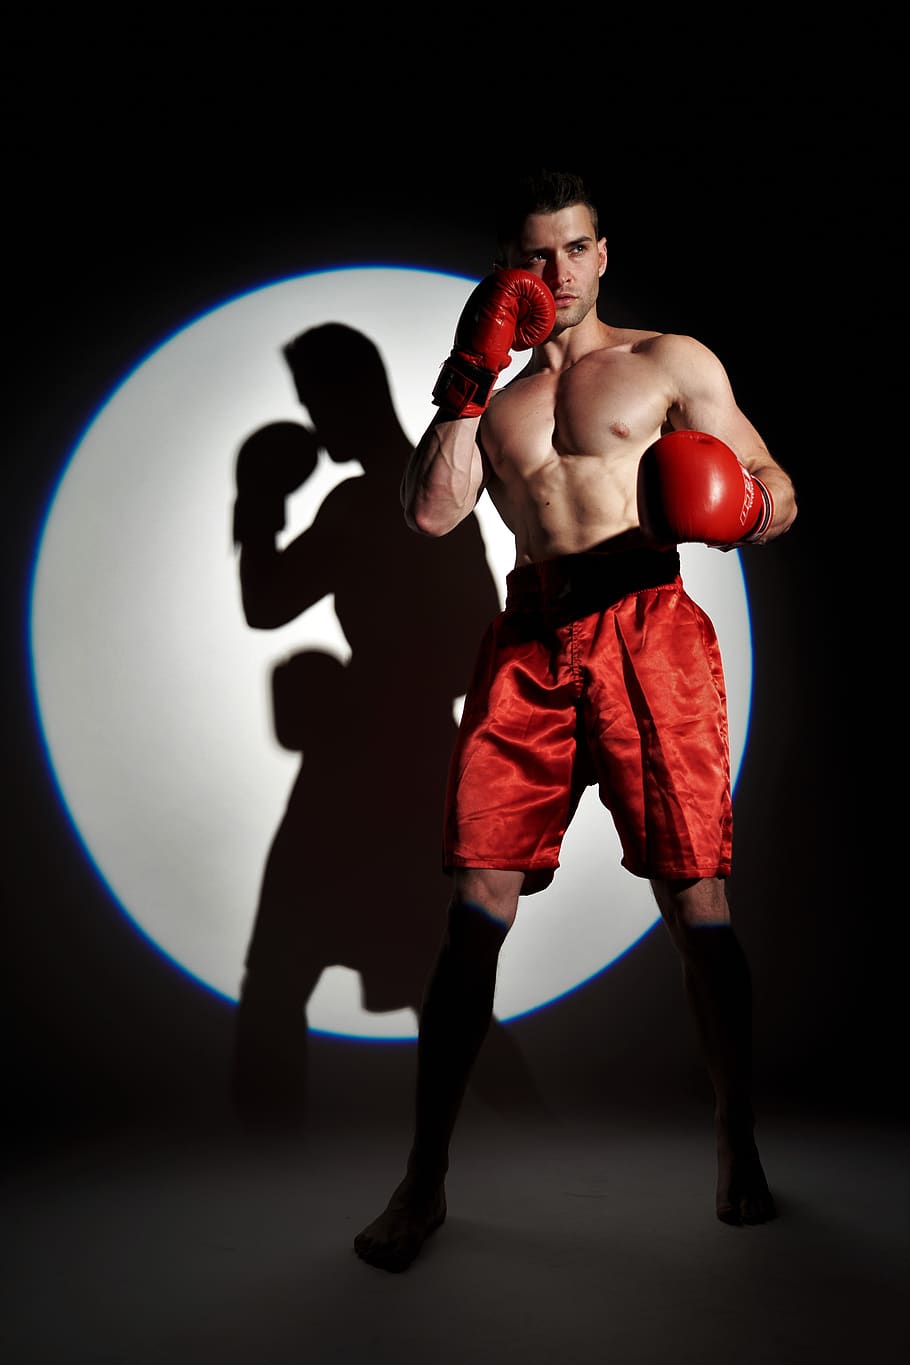 boxe, esporte, esportes, boxeador, batalha, luvas, kickboxing, atleta, sem camisa, homens